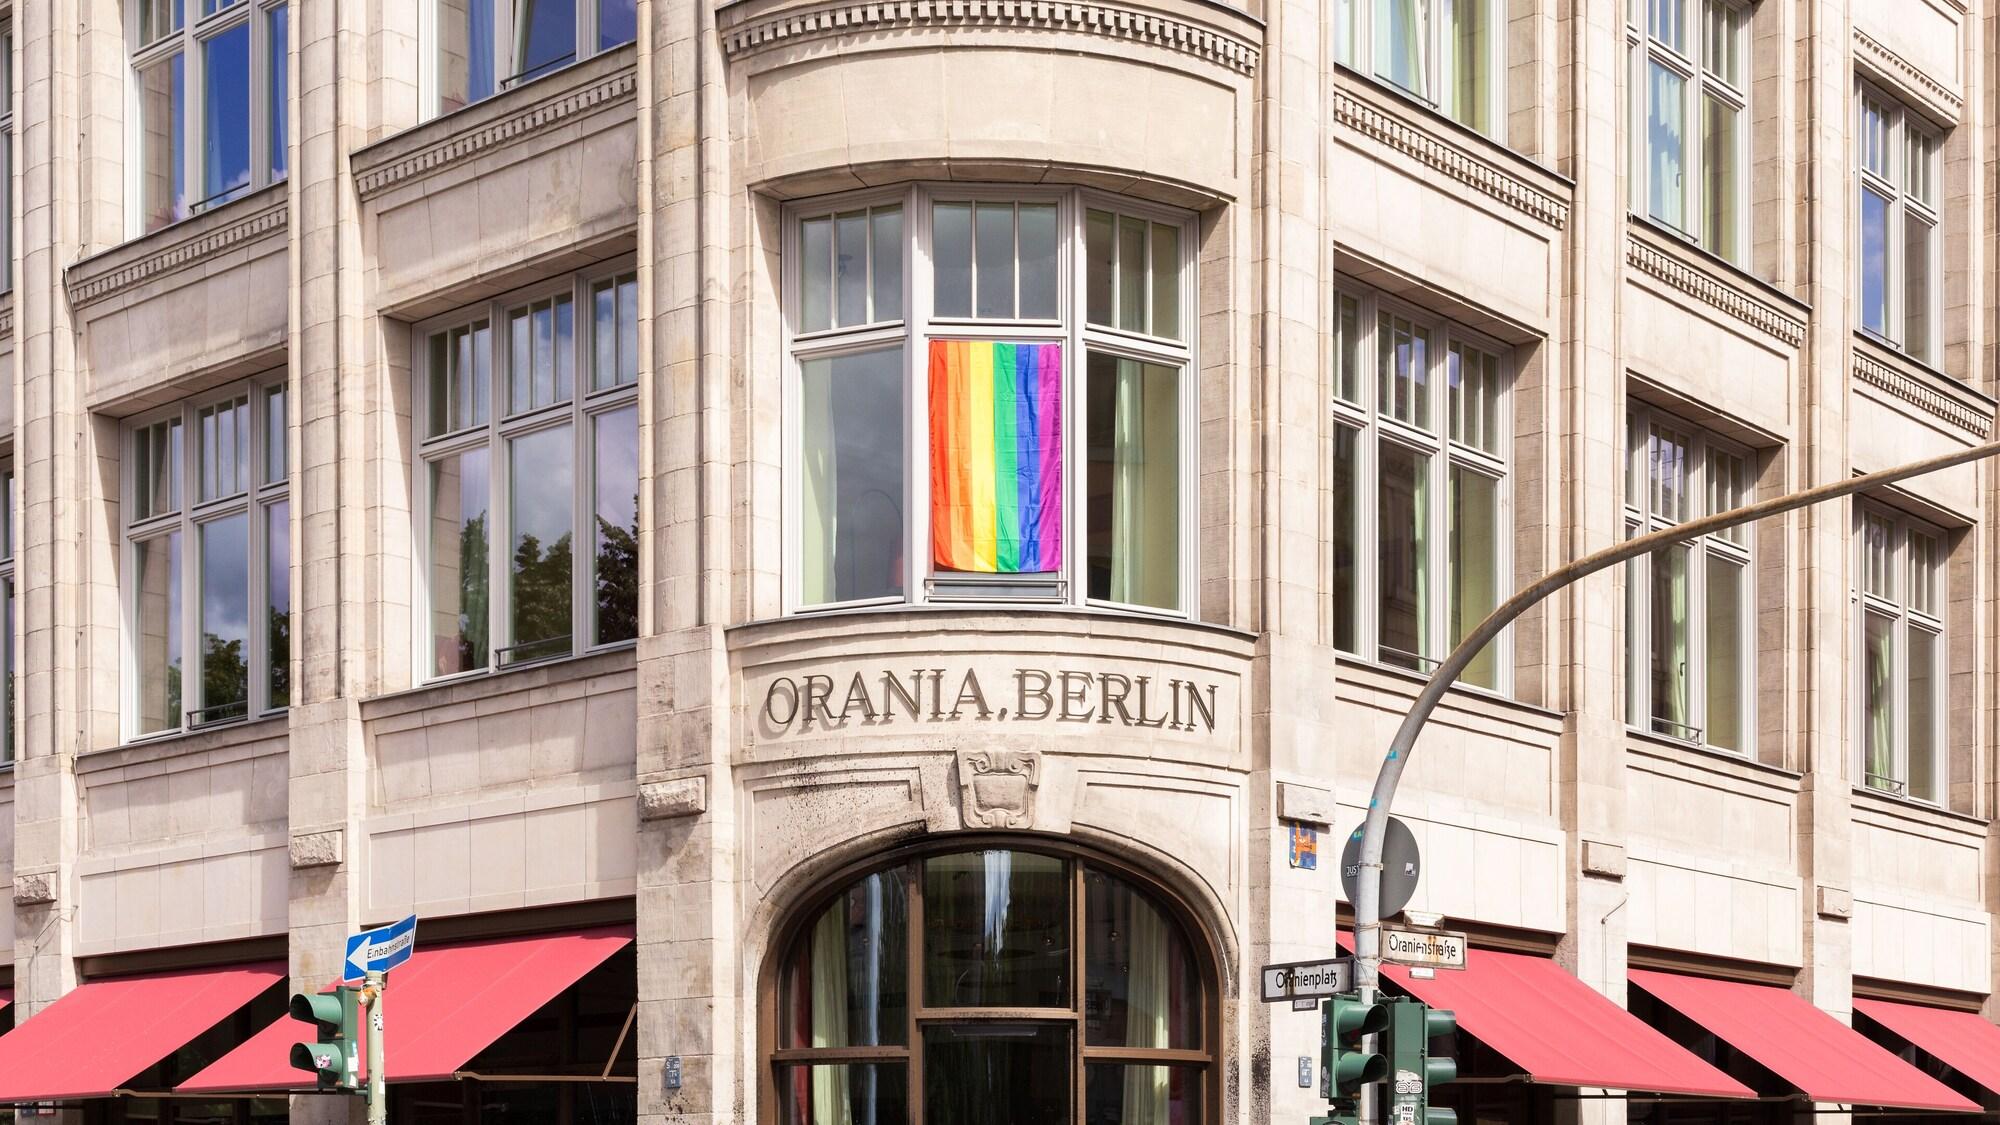 Hotel Orania.Berlin